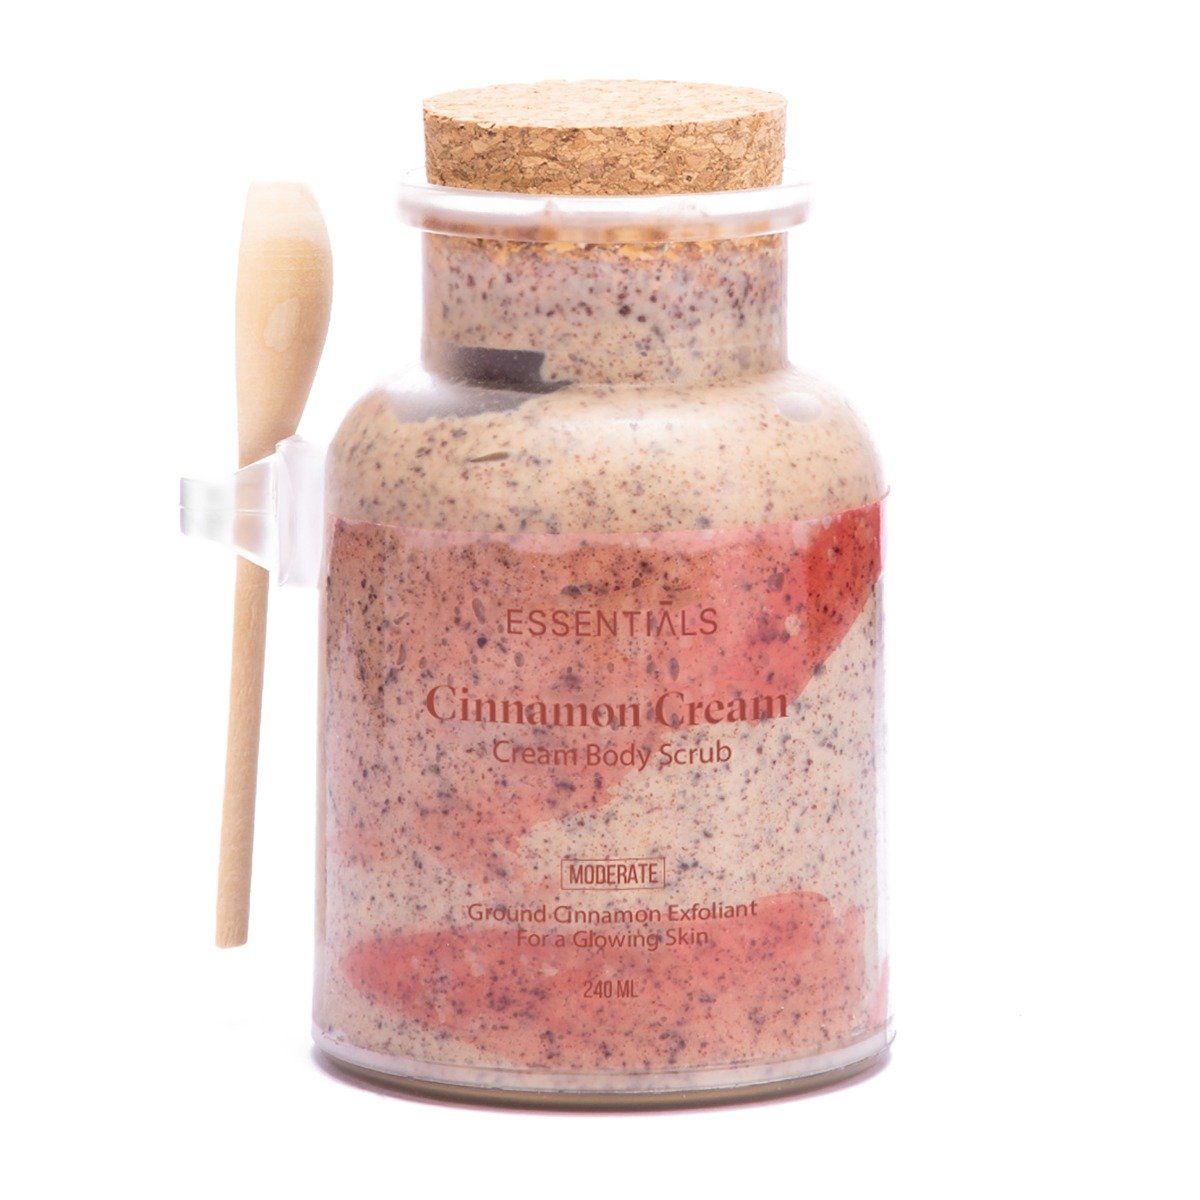 Essentials Cinnamon Cream Body Scrub - 240ml - Bloom Pharmacy